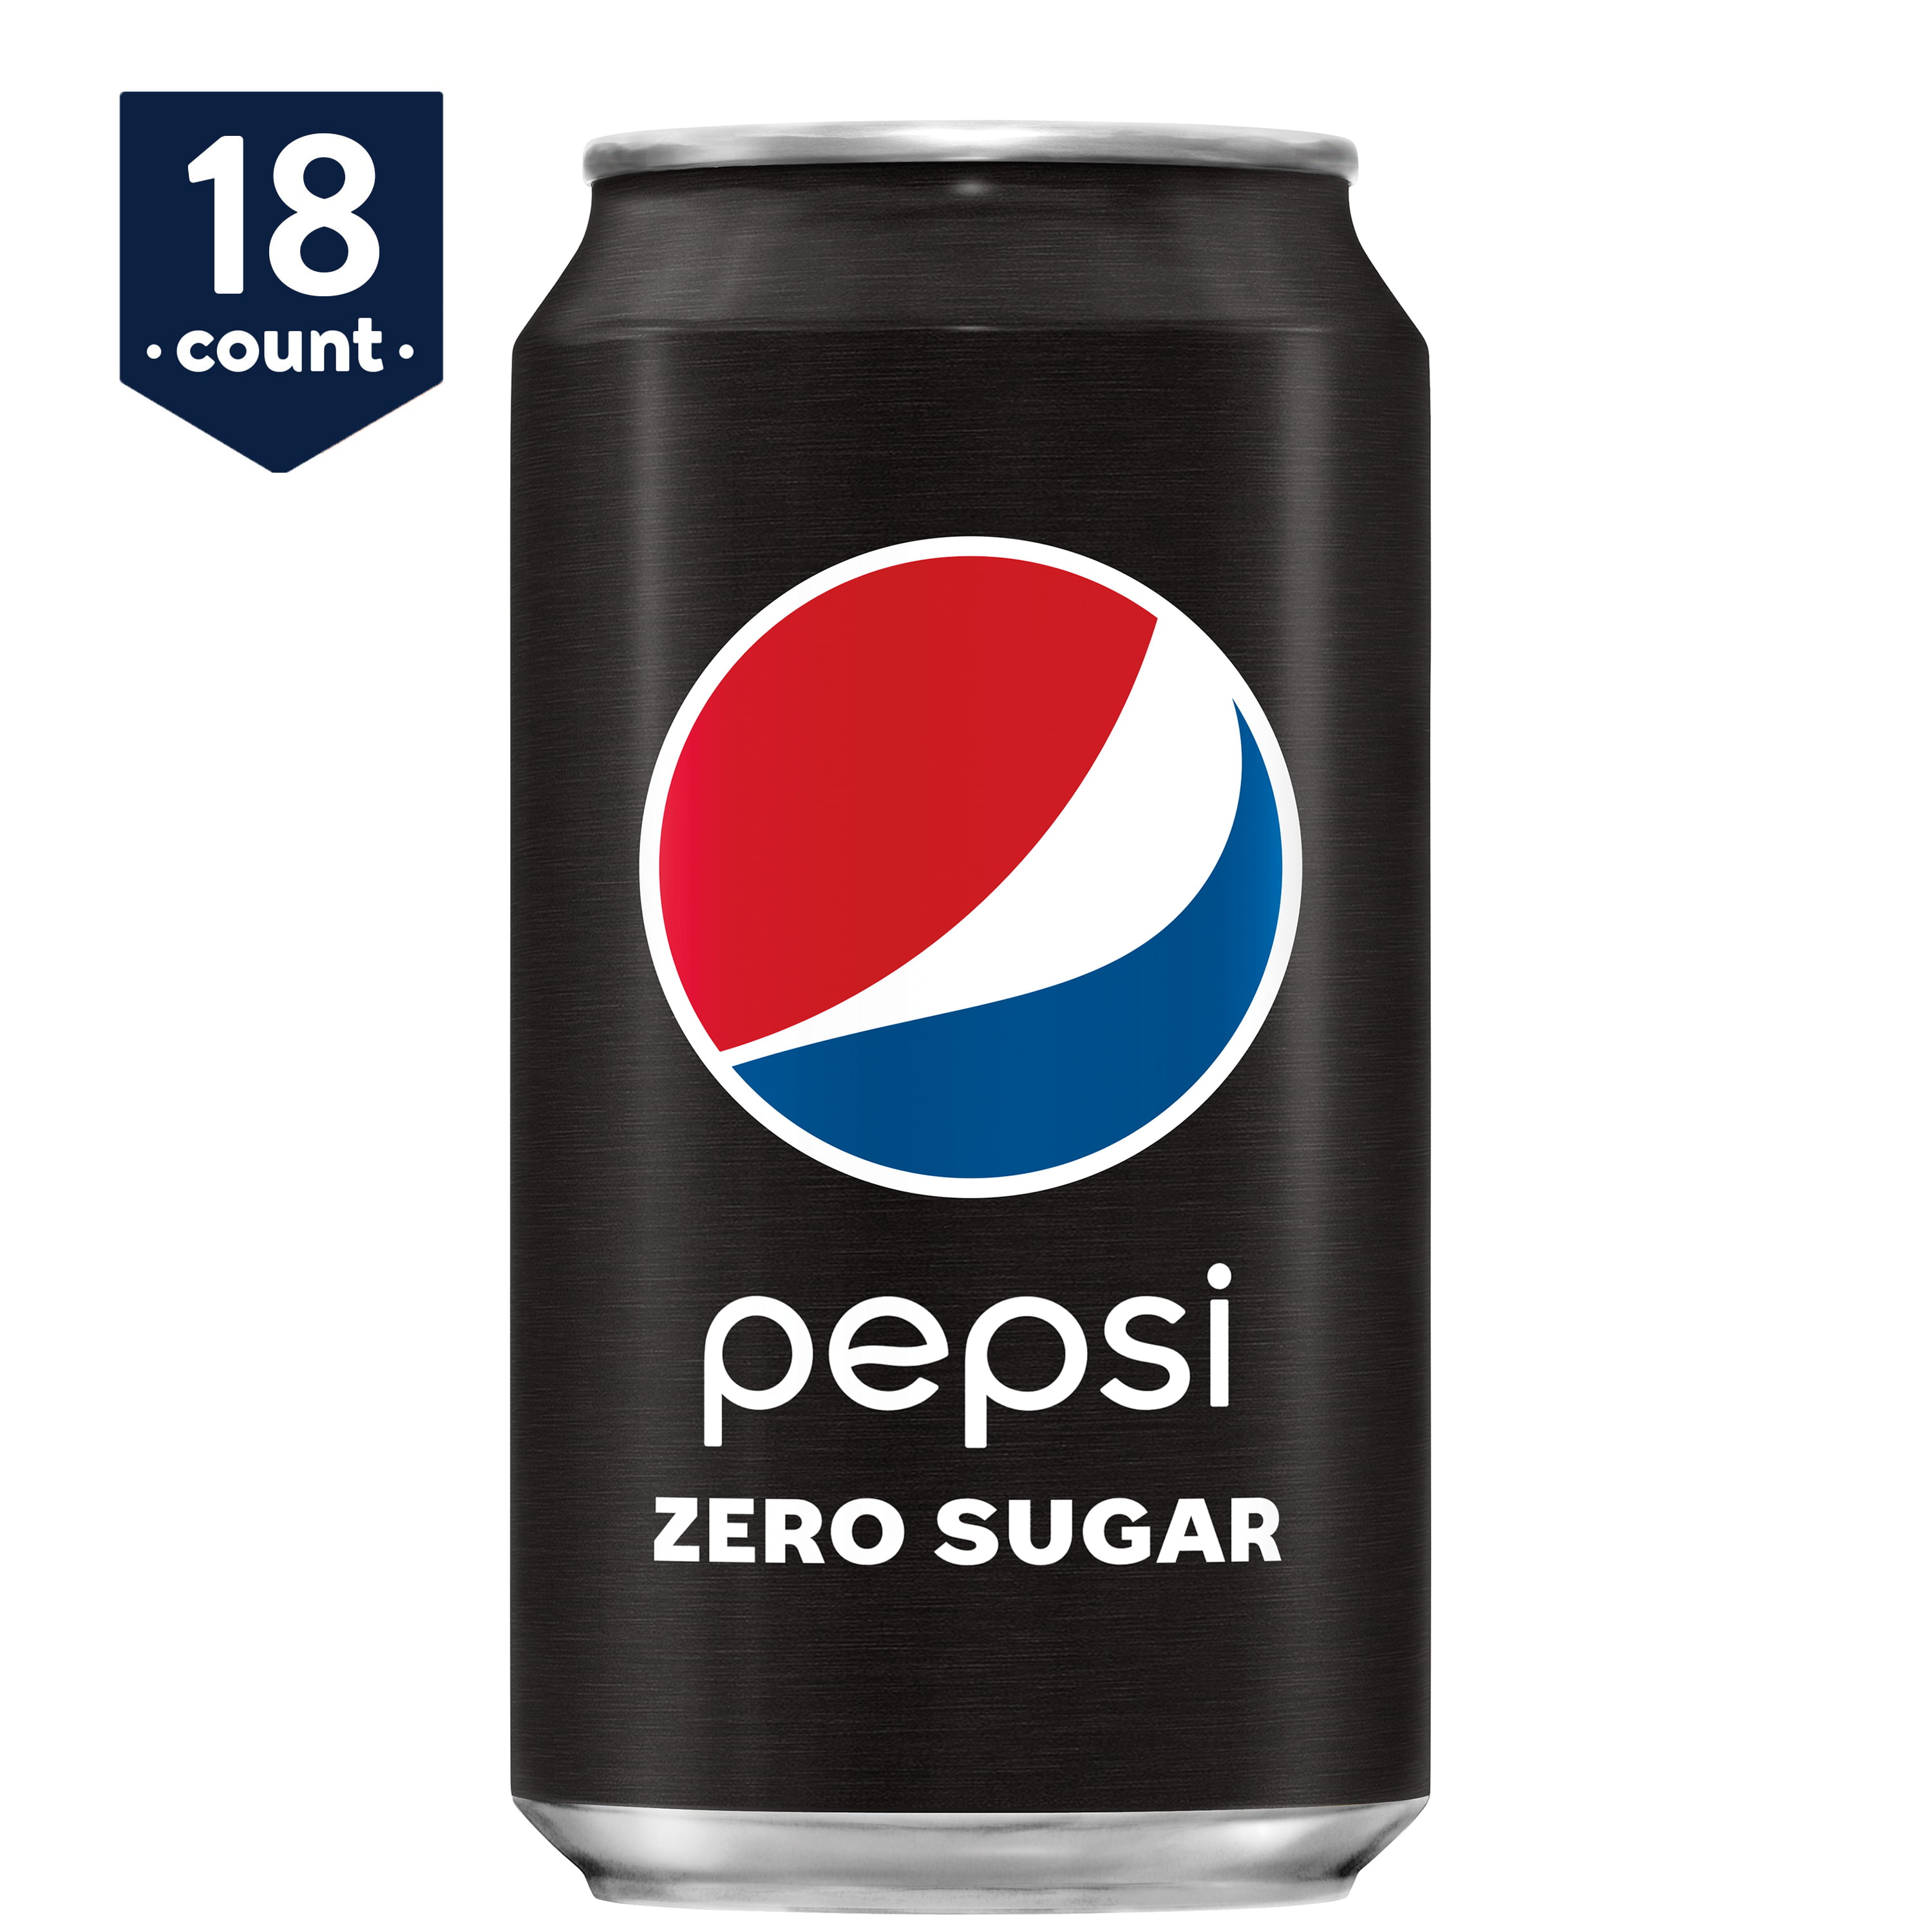 pepsi-zero-sugar-12-oz-cans-18-count-walmart-walmart